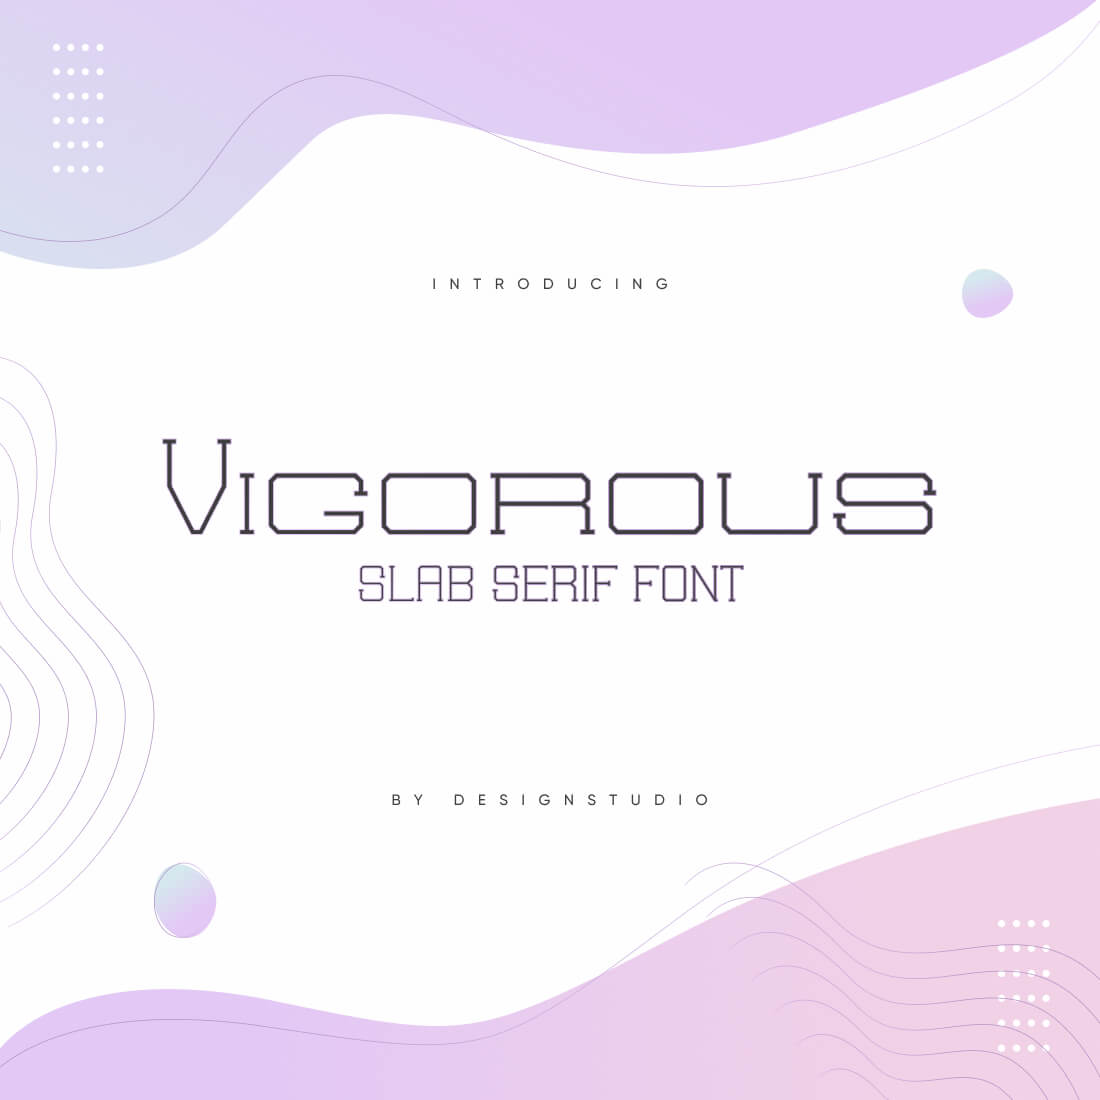 Vigorous Slab Serif Font cover image.